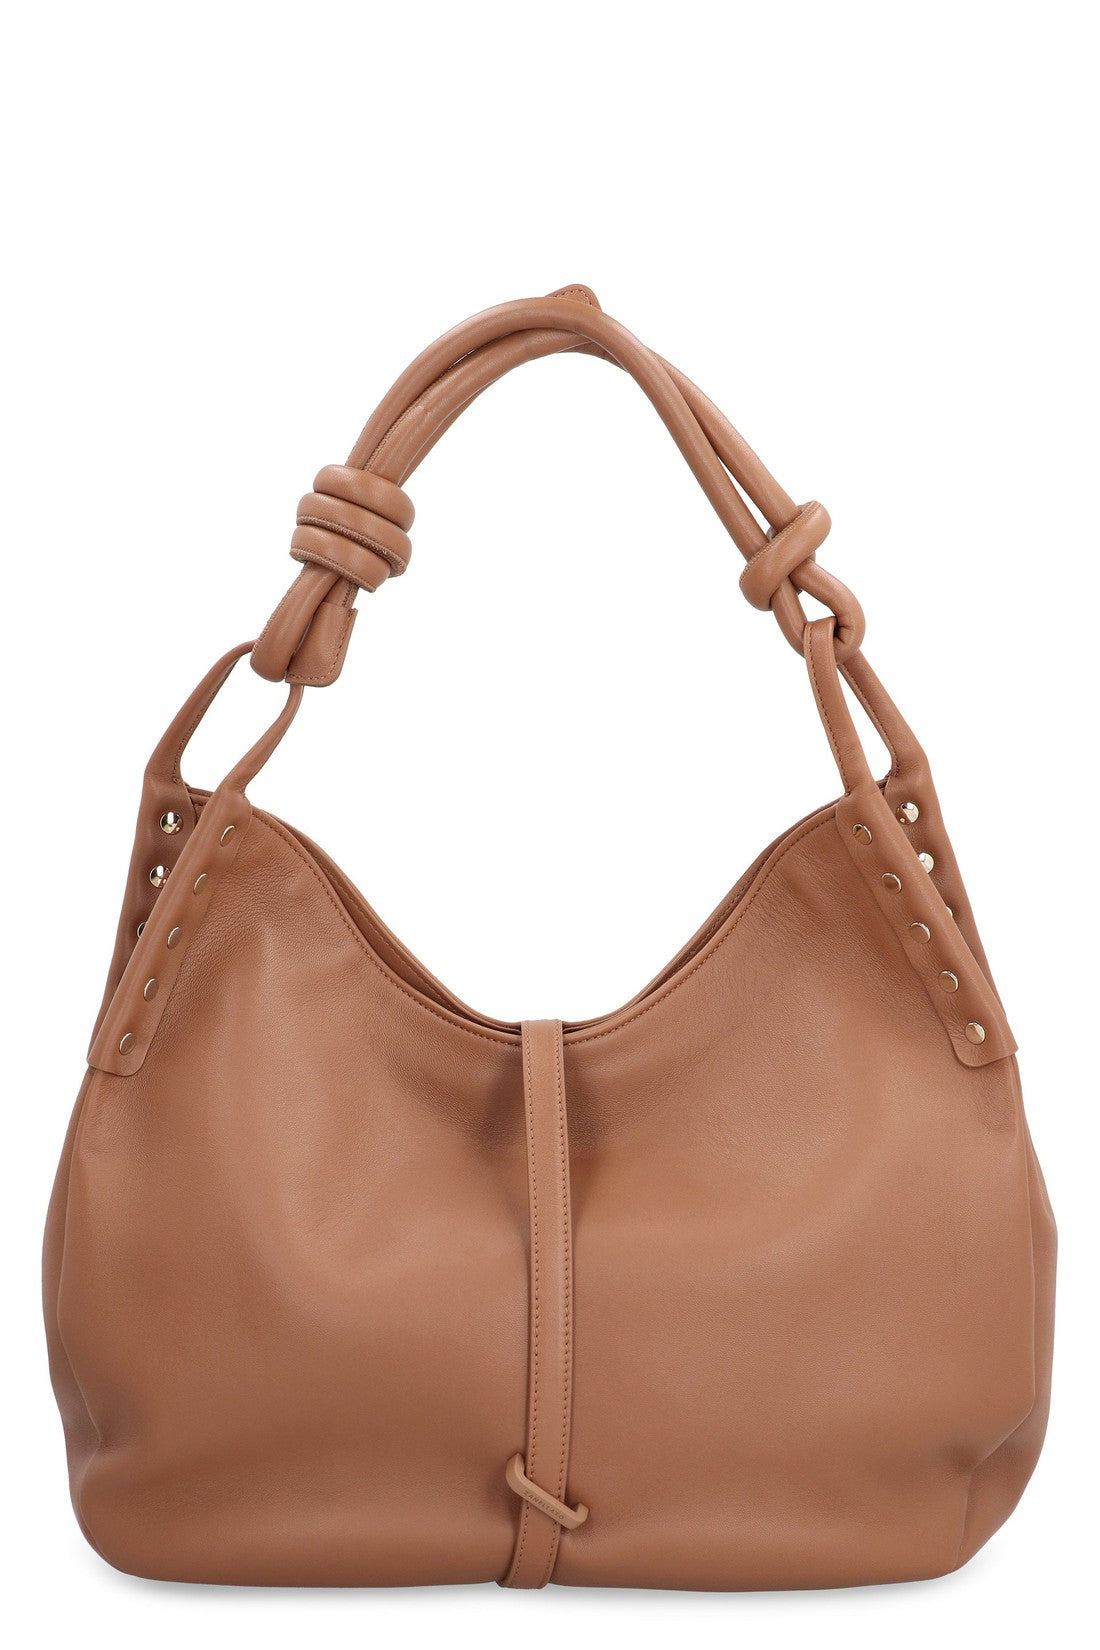 Zanellato-OUTLET-SALE-Ima leather shoulder bag-ARCHIVIST